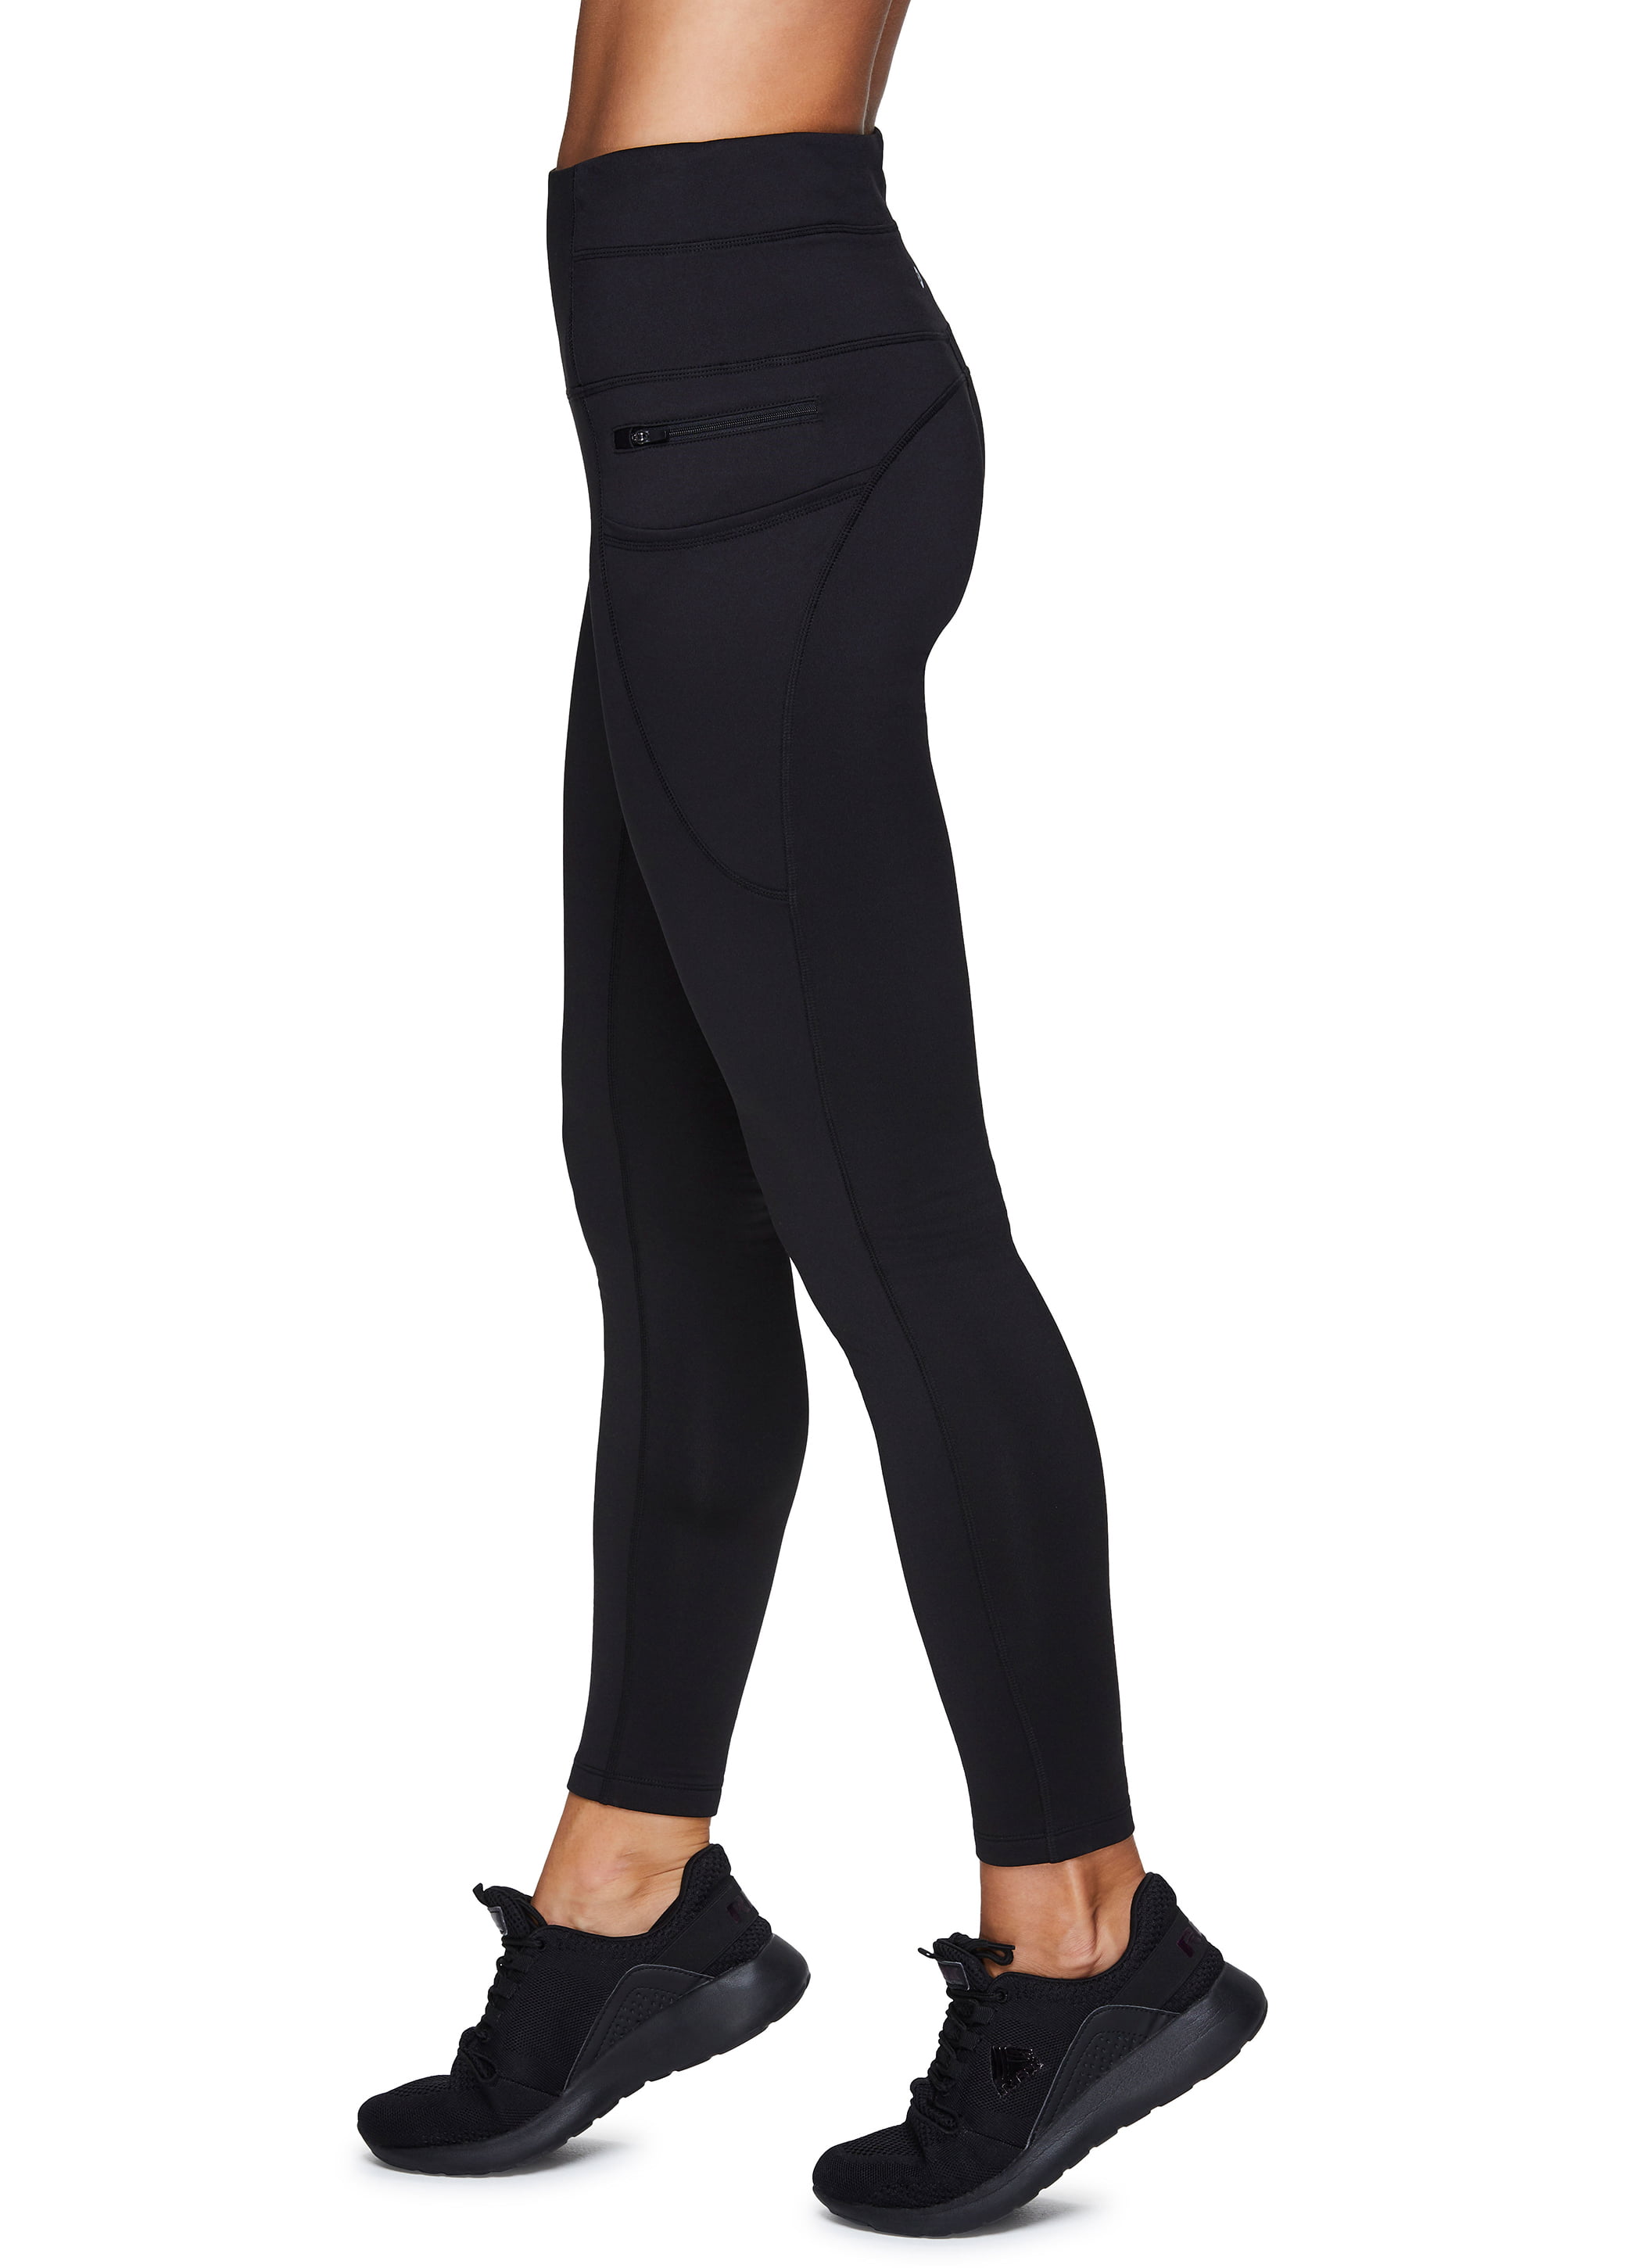 Women's Black High Waist Full Length Leggings w/Side Pockets by RBX at  Fleet Farm